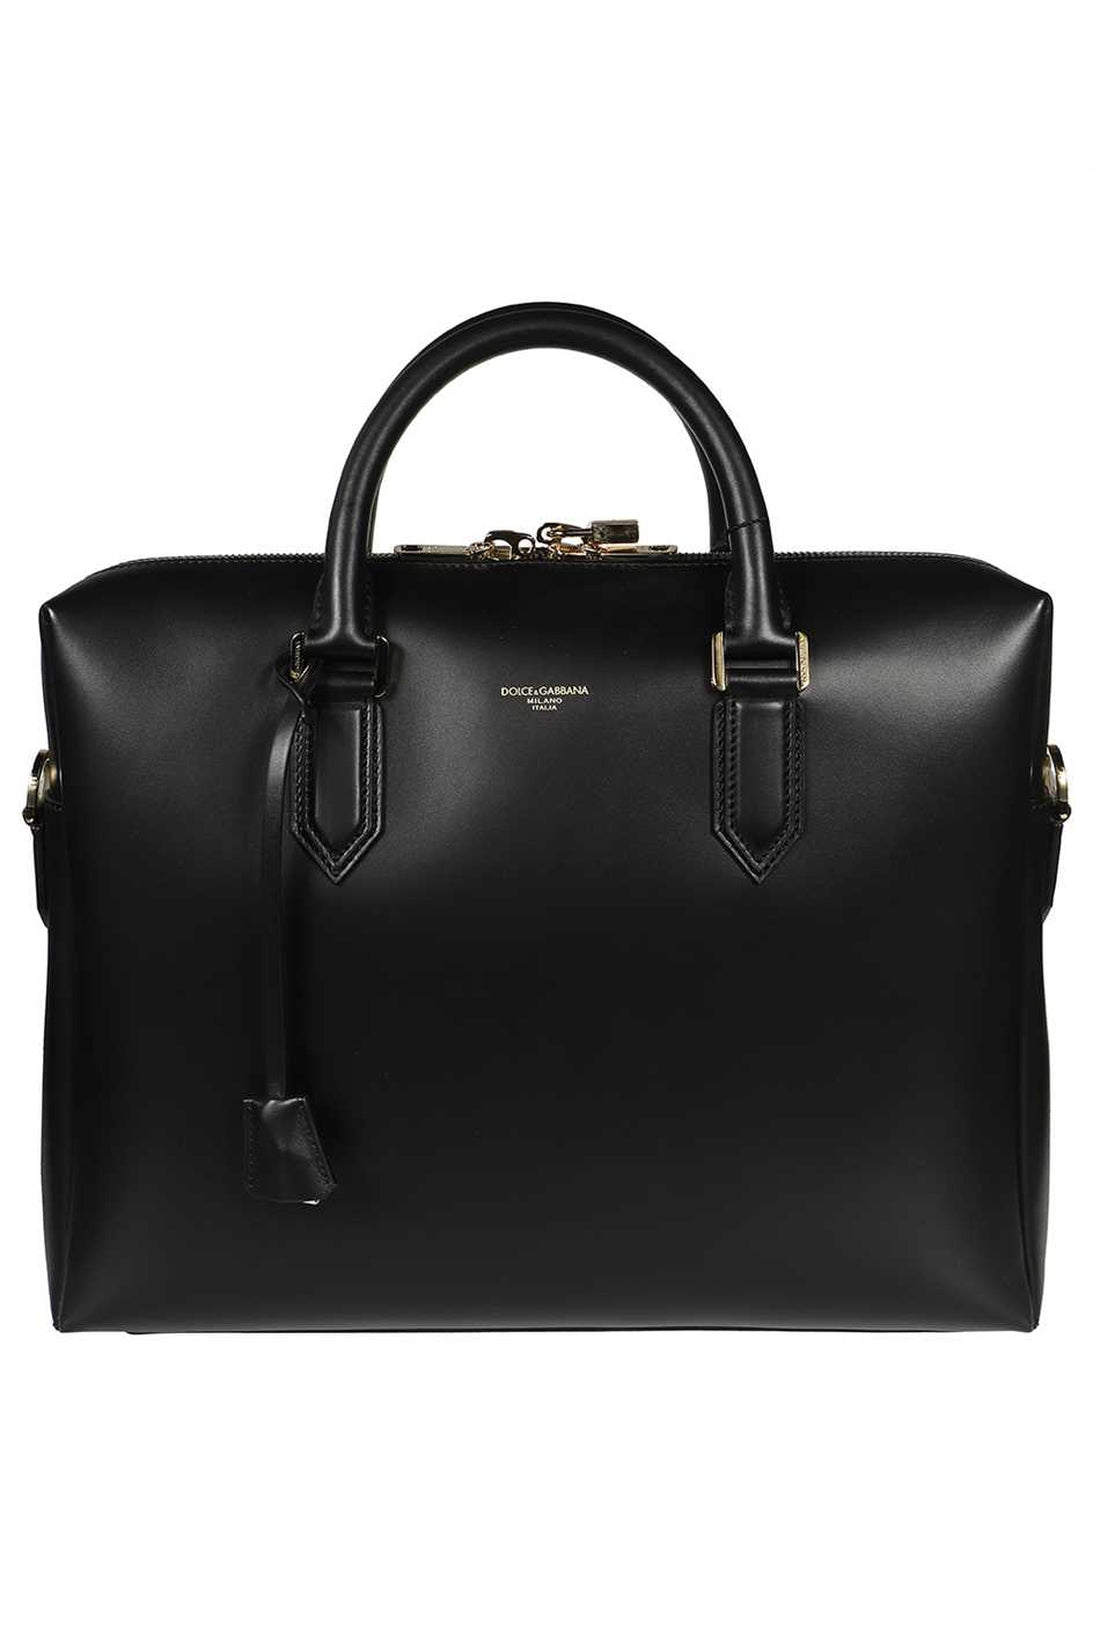 Dolce & Gabbana-OUTLET-SALE-Leather briefcase-ARCHIVIST